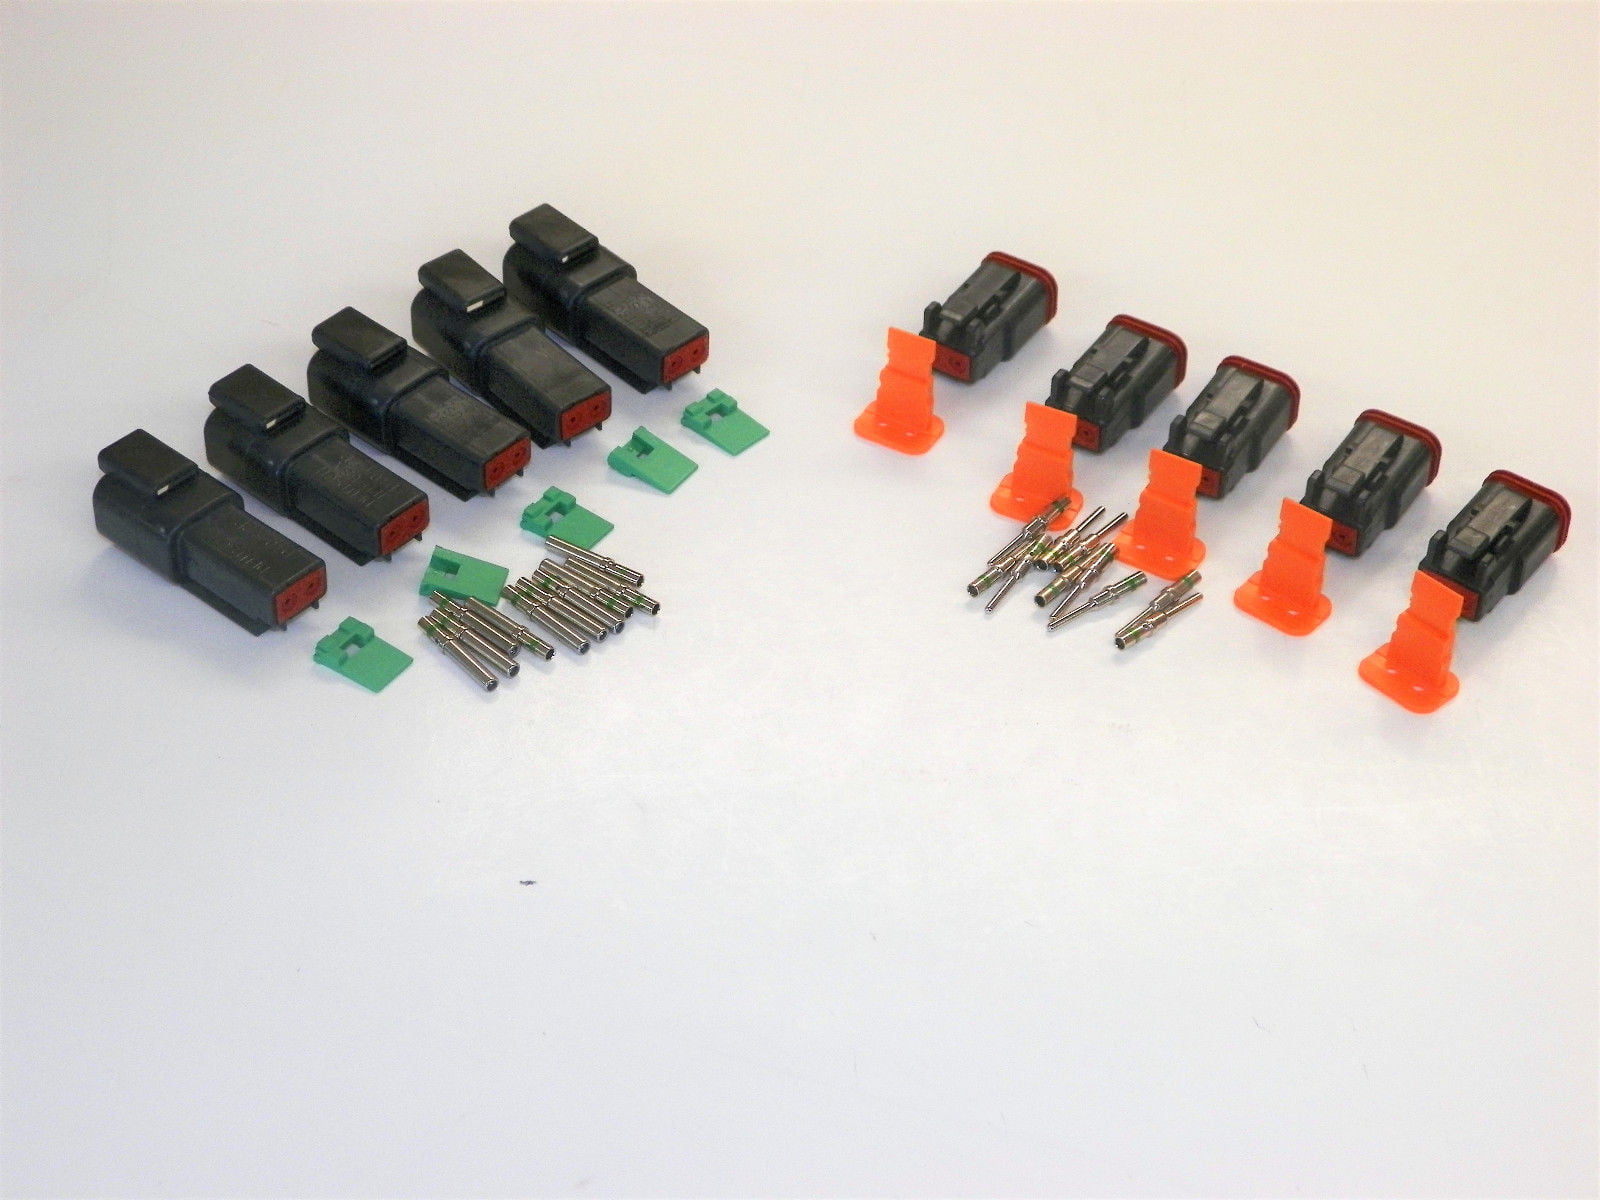 50 Deutsch DT #16 Solid Contact Terminals Female Sockets for 14-16-18 gauge wire 